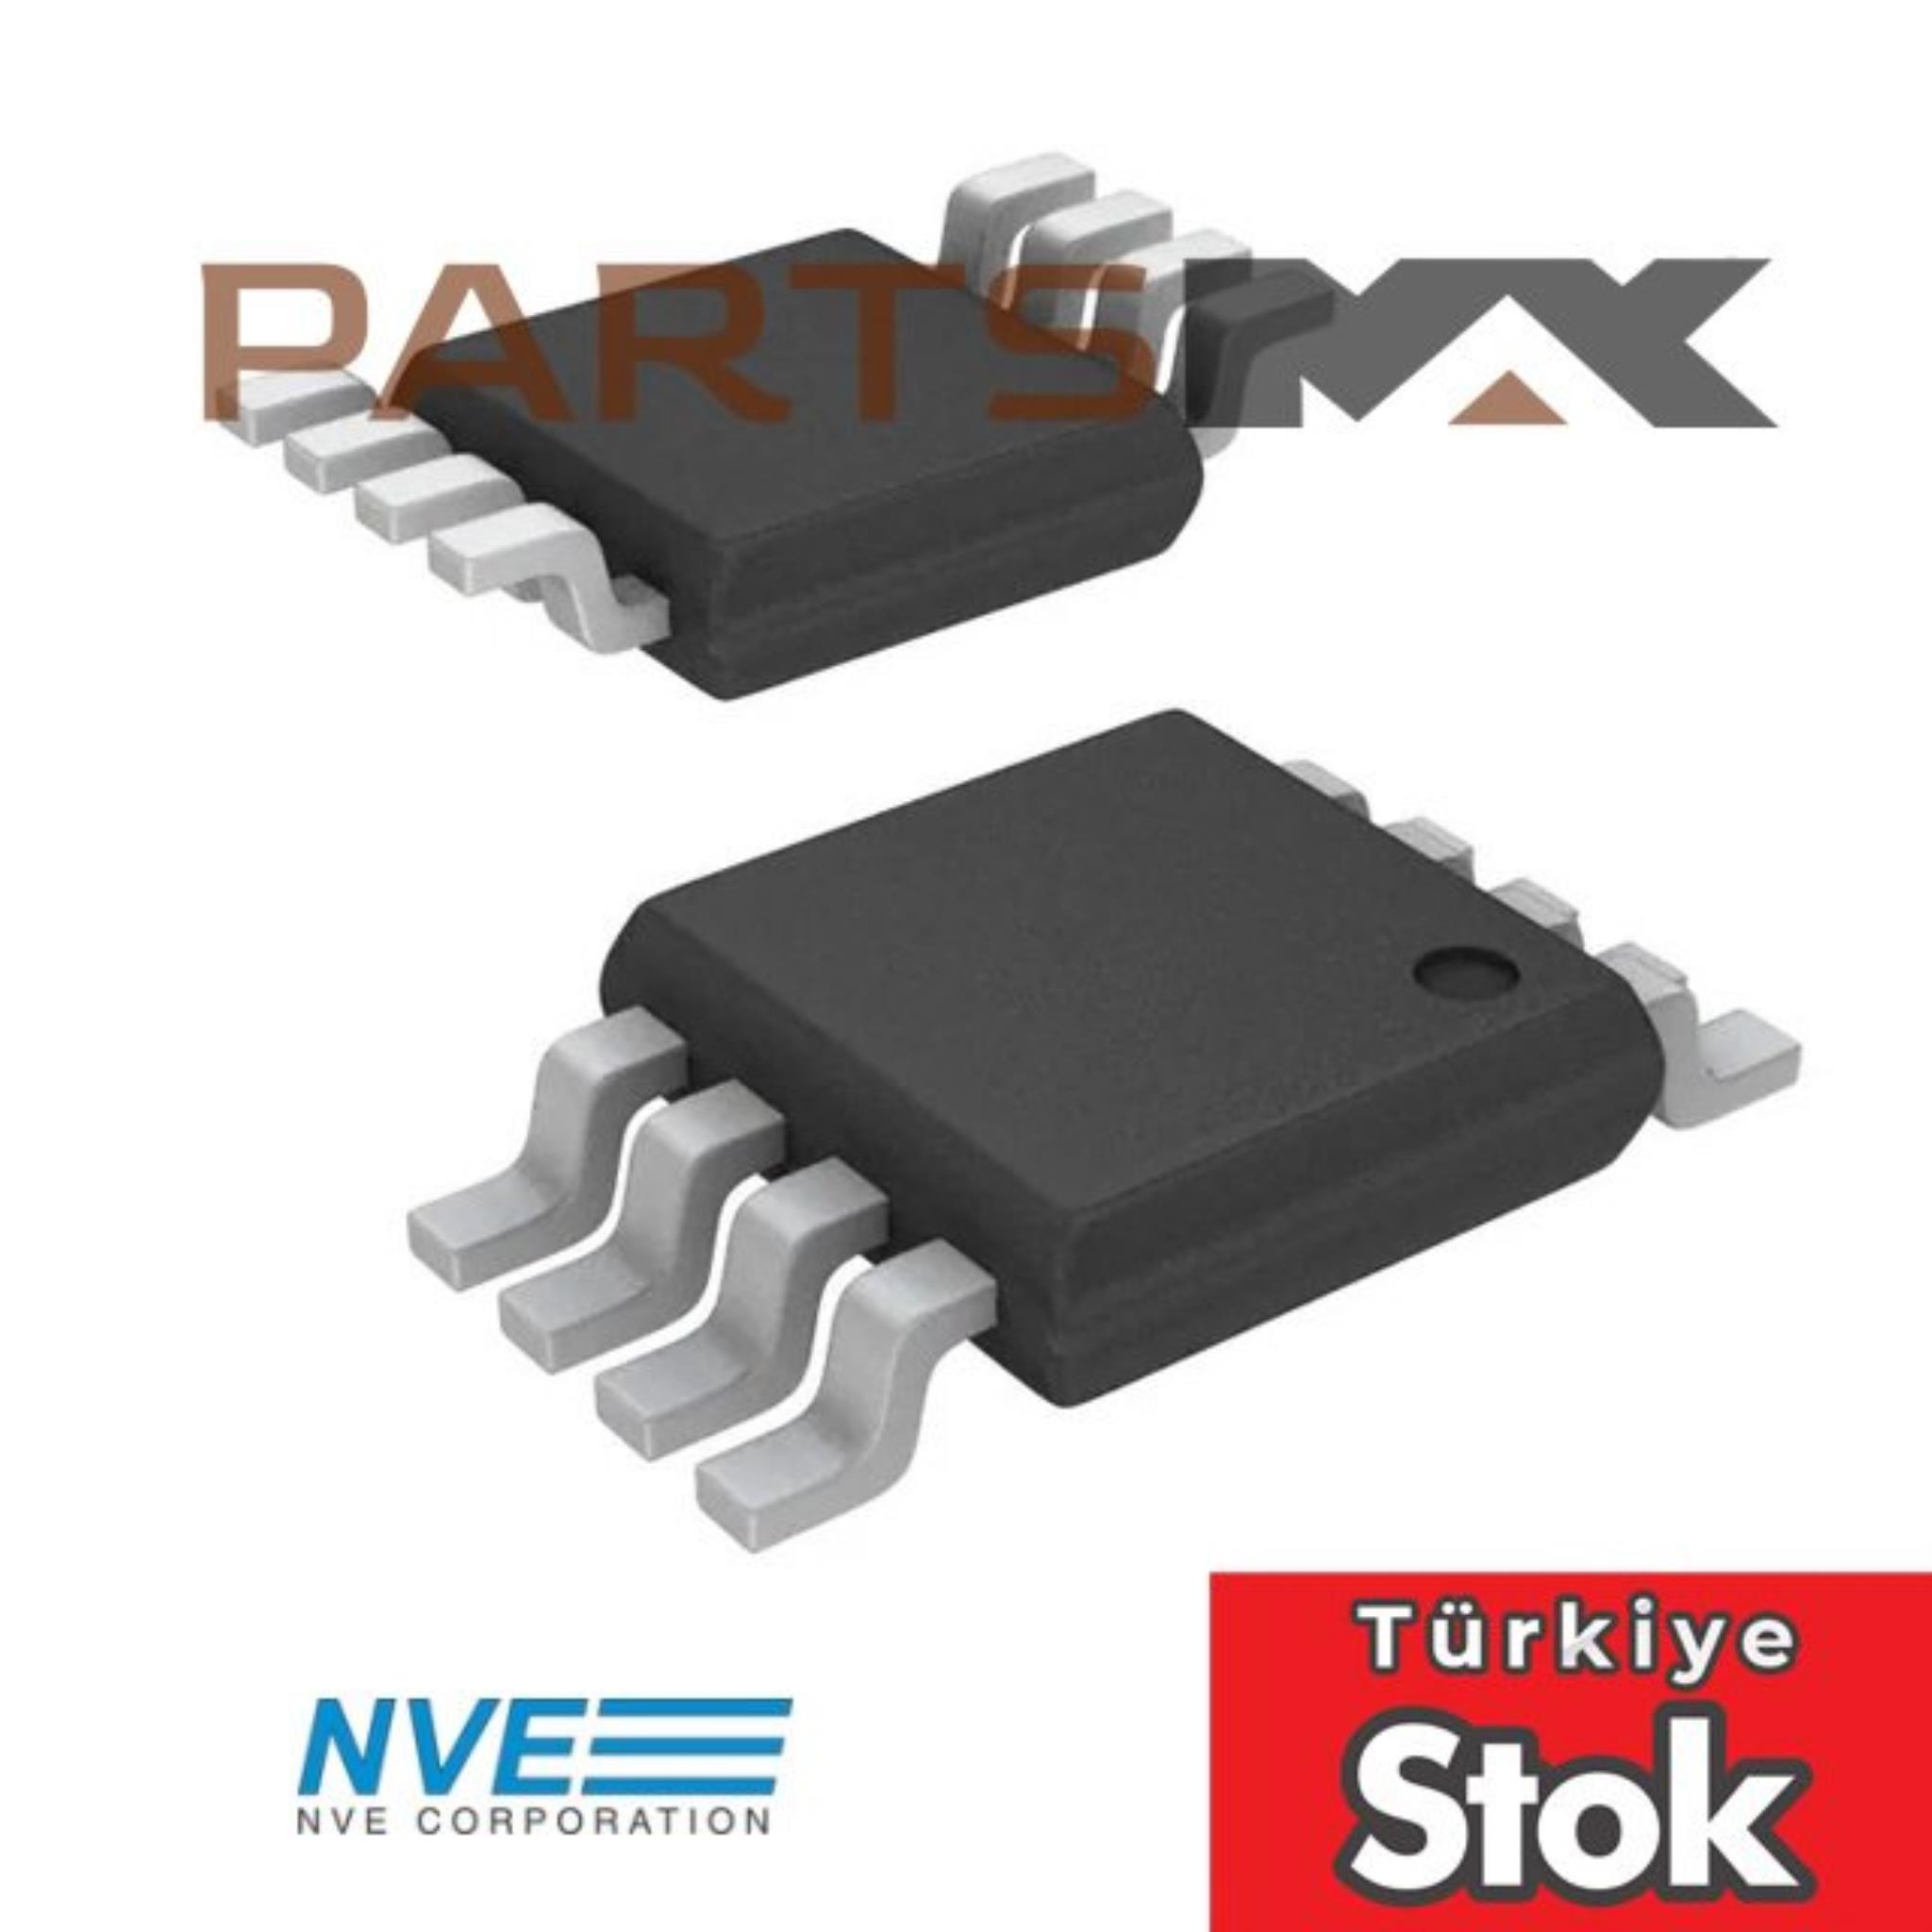 Picture of IL 611-1E NVE Corp | Partsmax Türkiye